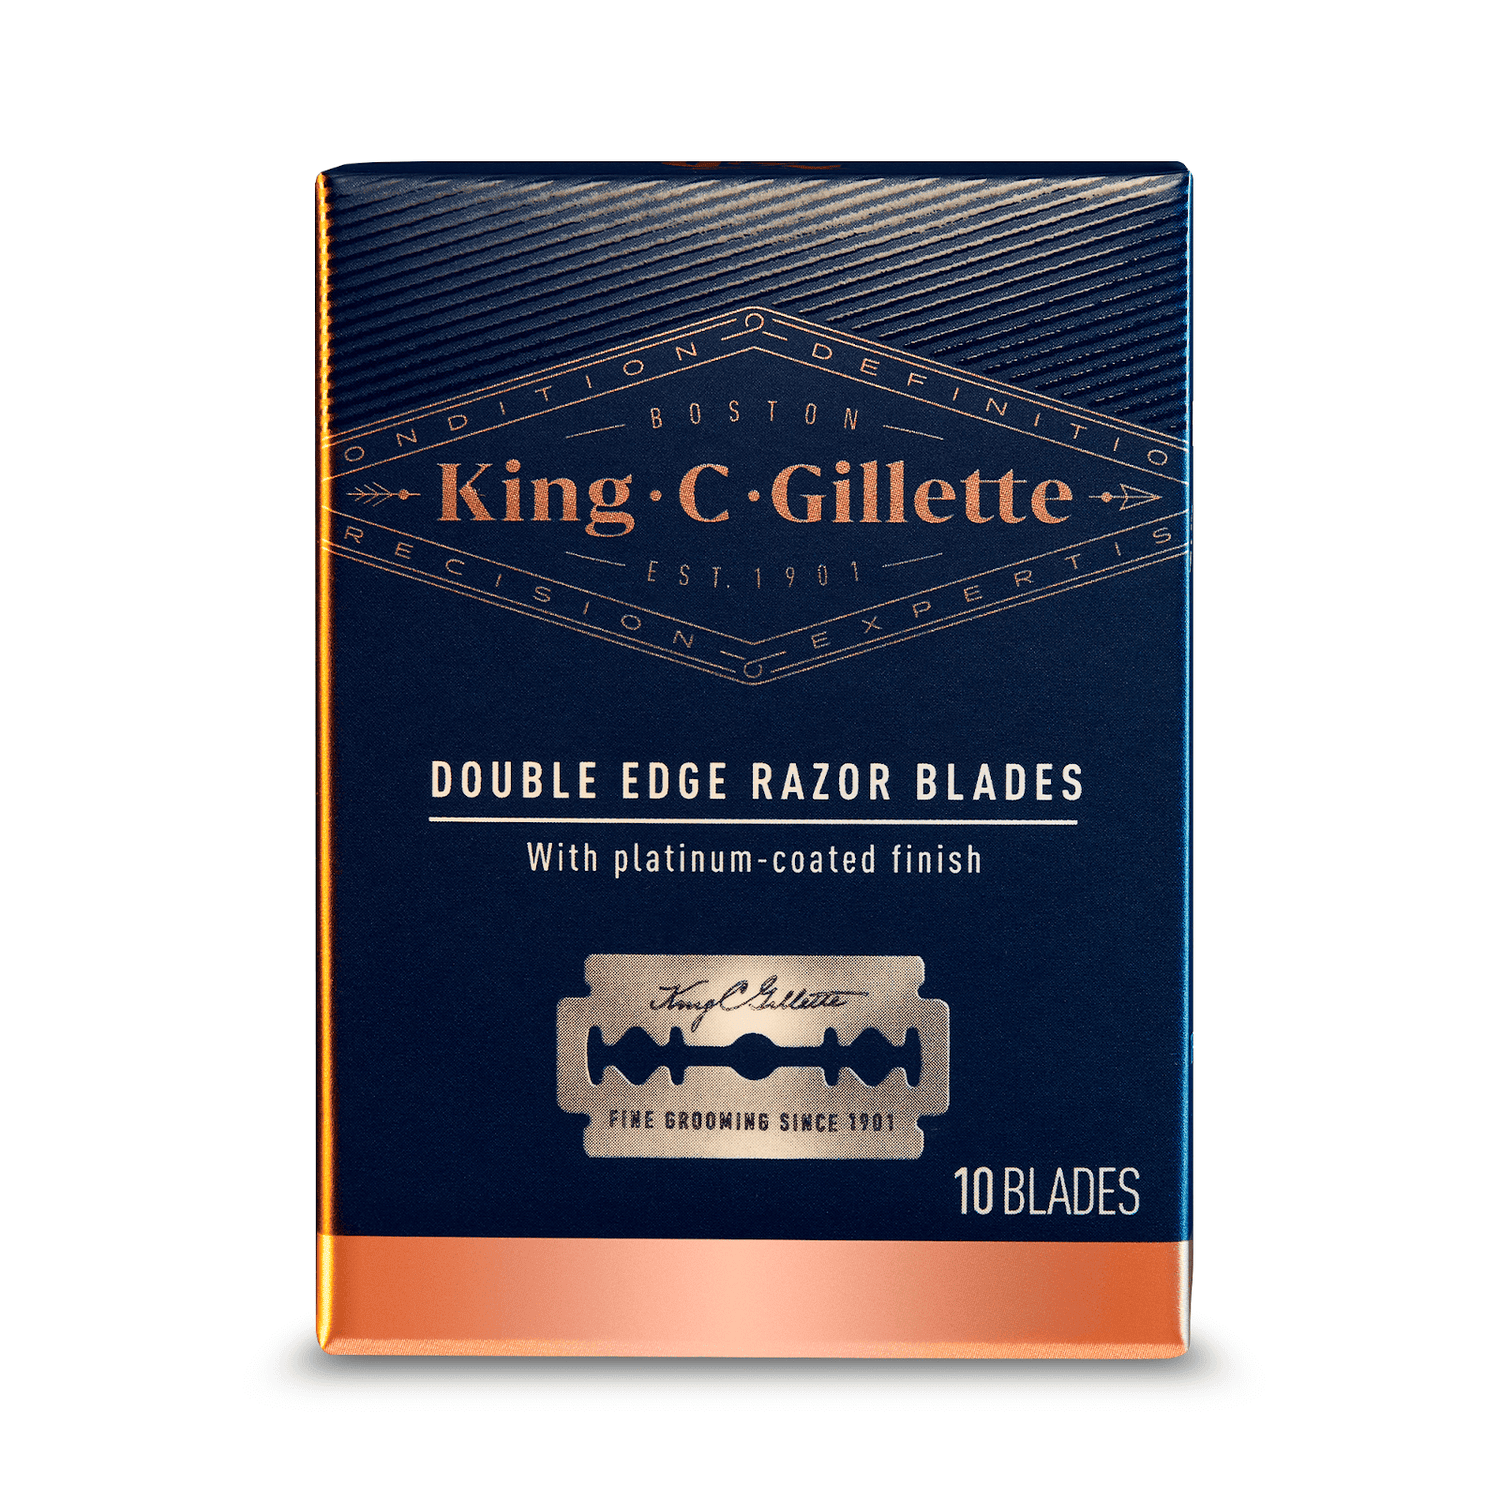 King C. Gillette Double Edge Razor Blades